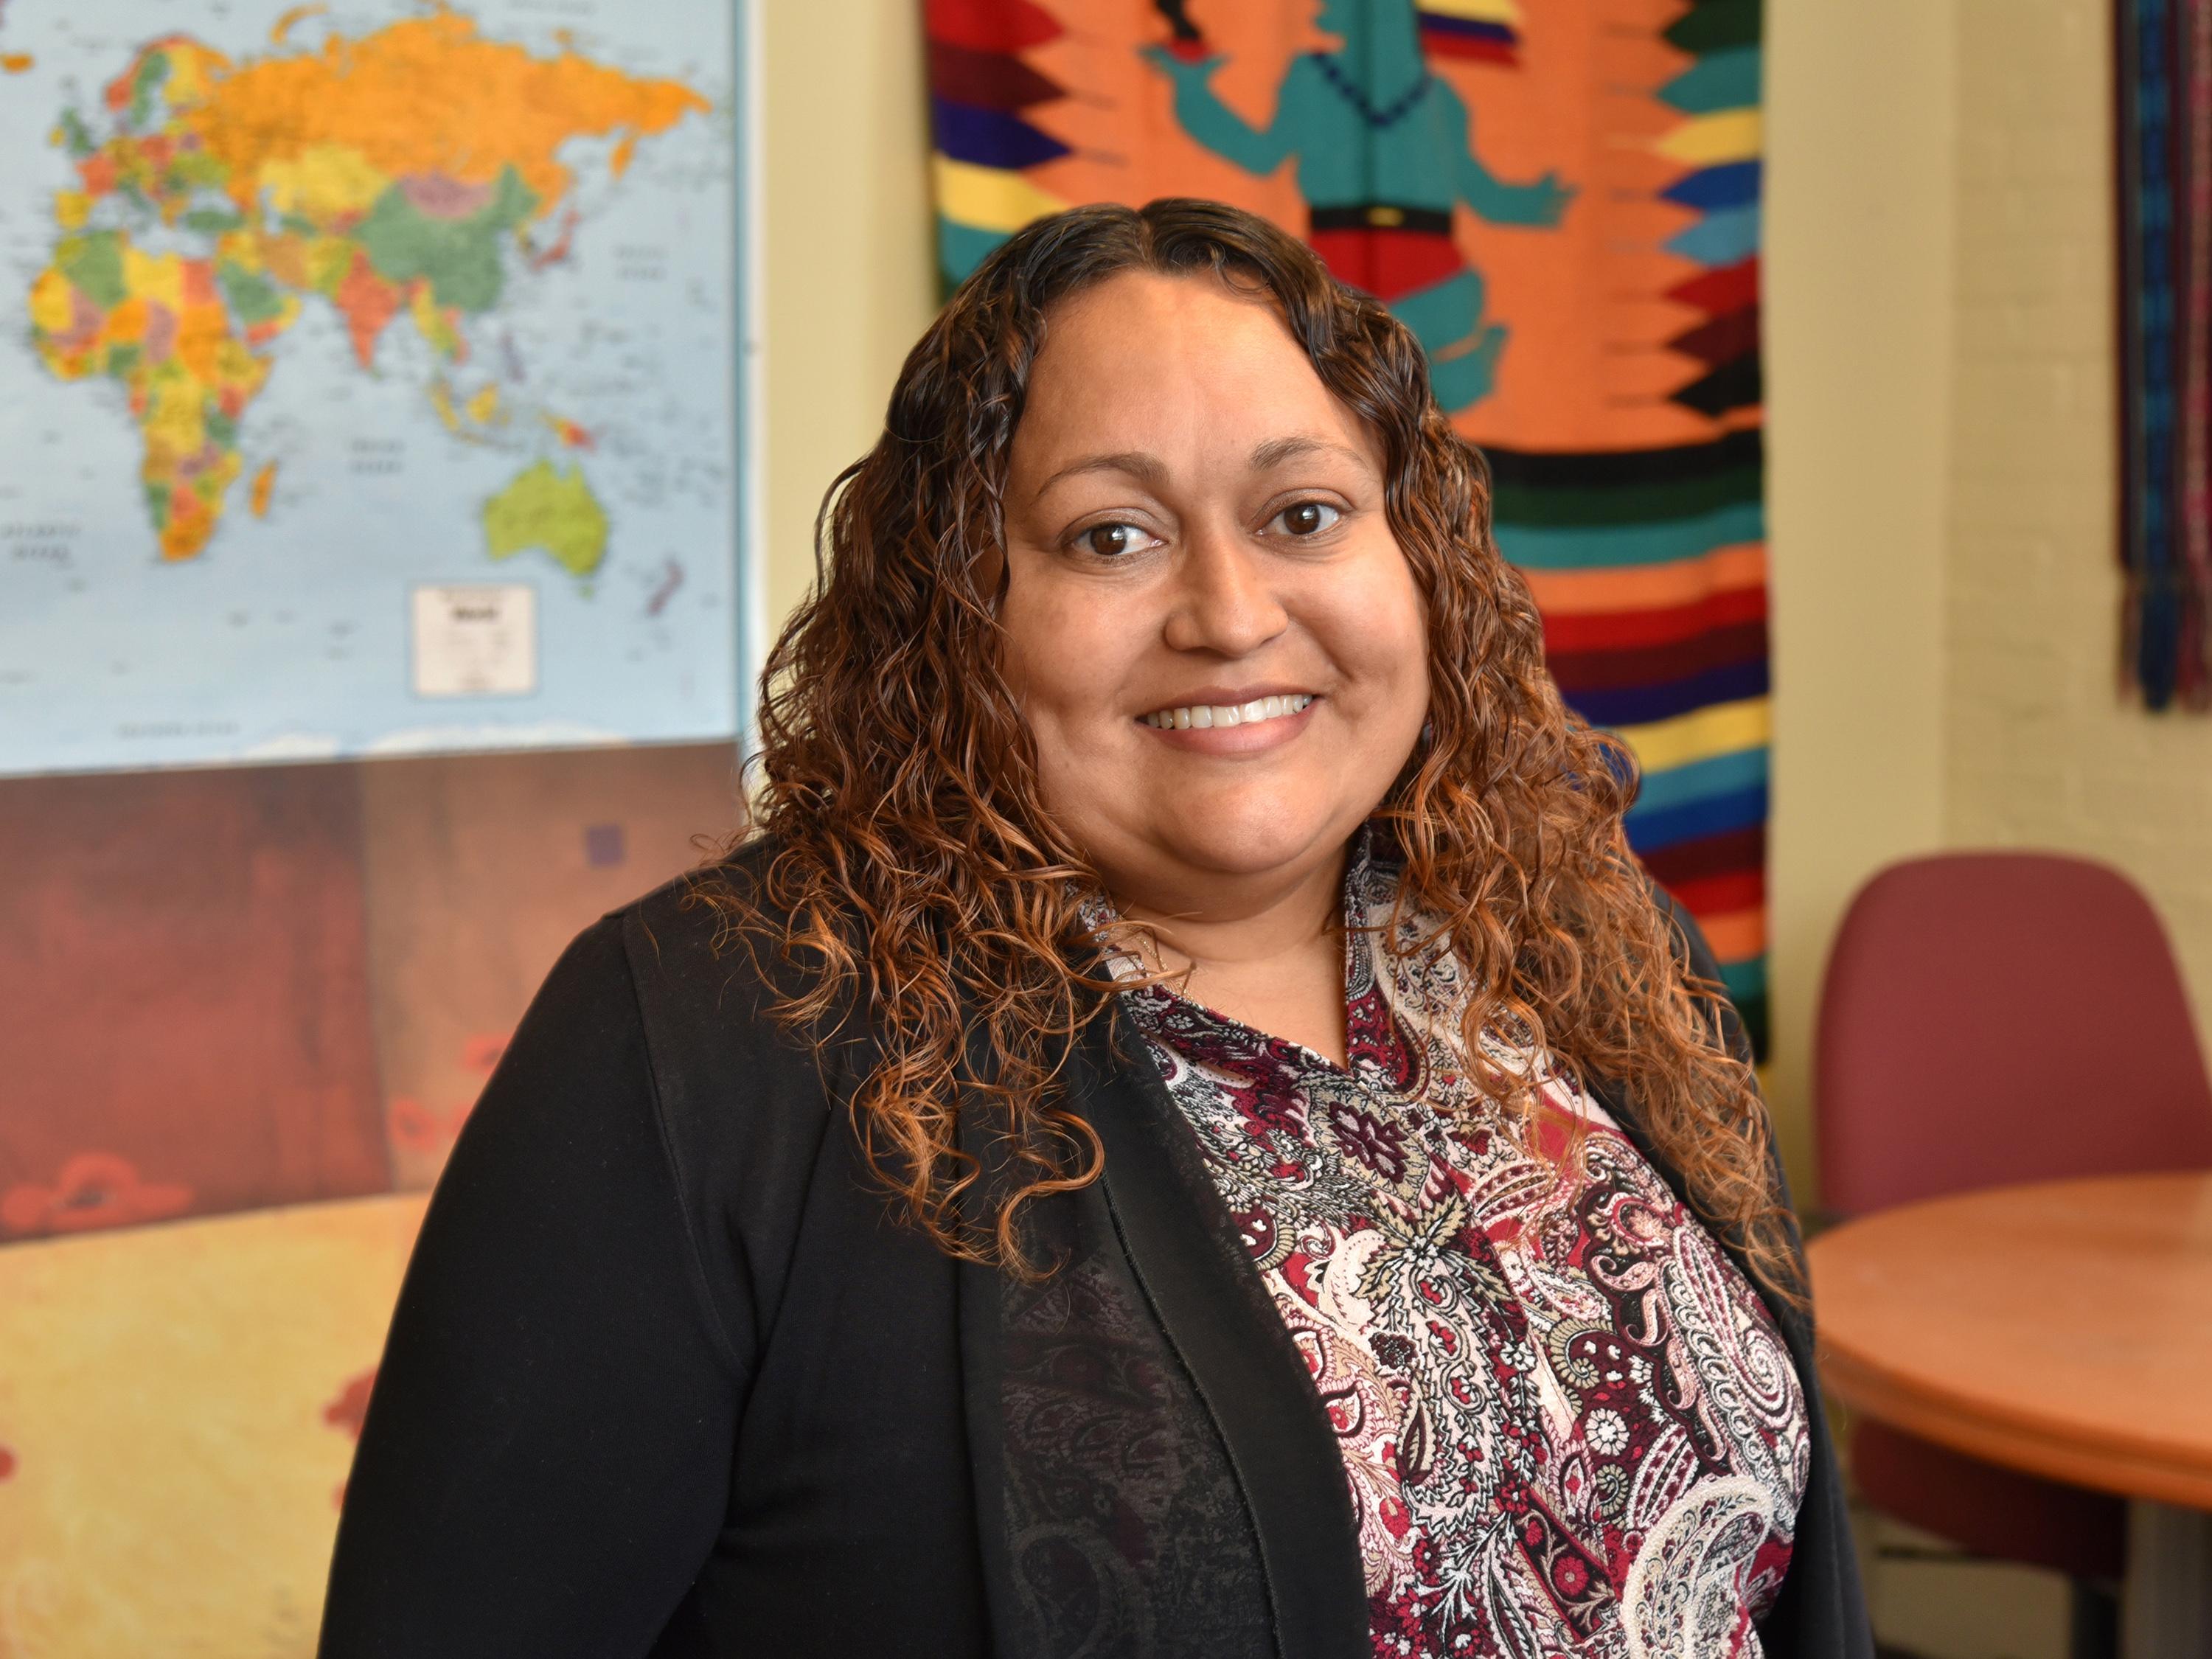 Lizette Alvarado was named a SUNY Hispanic Leadership Institute fellow